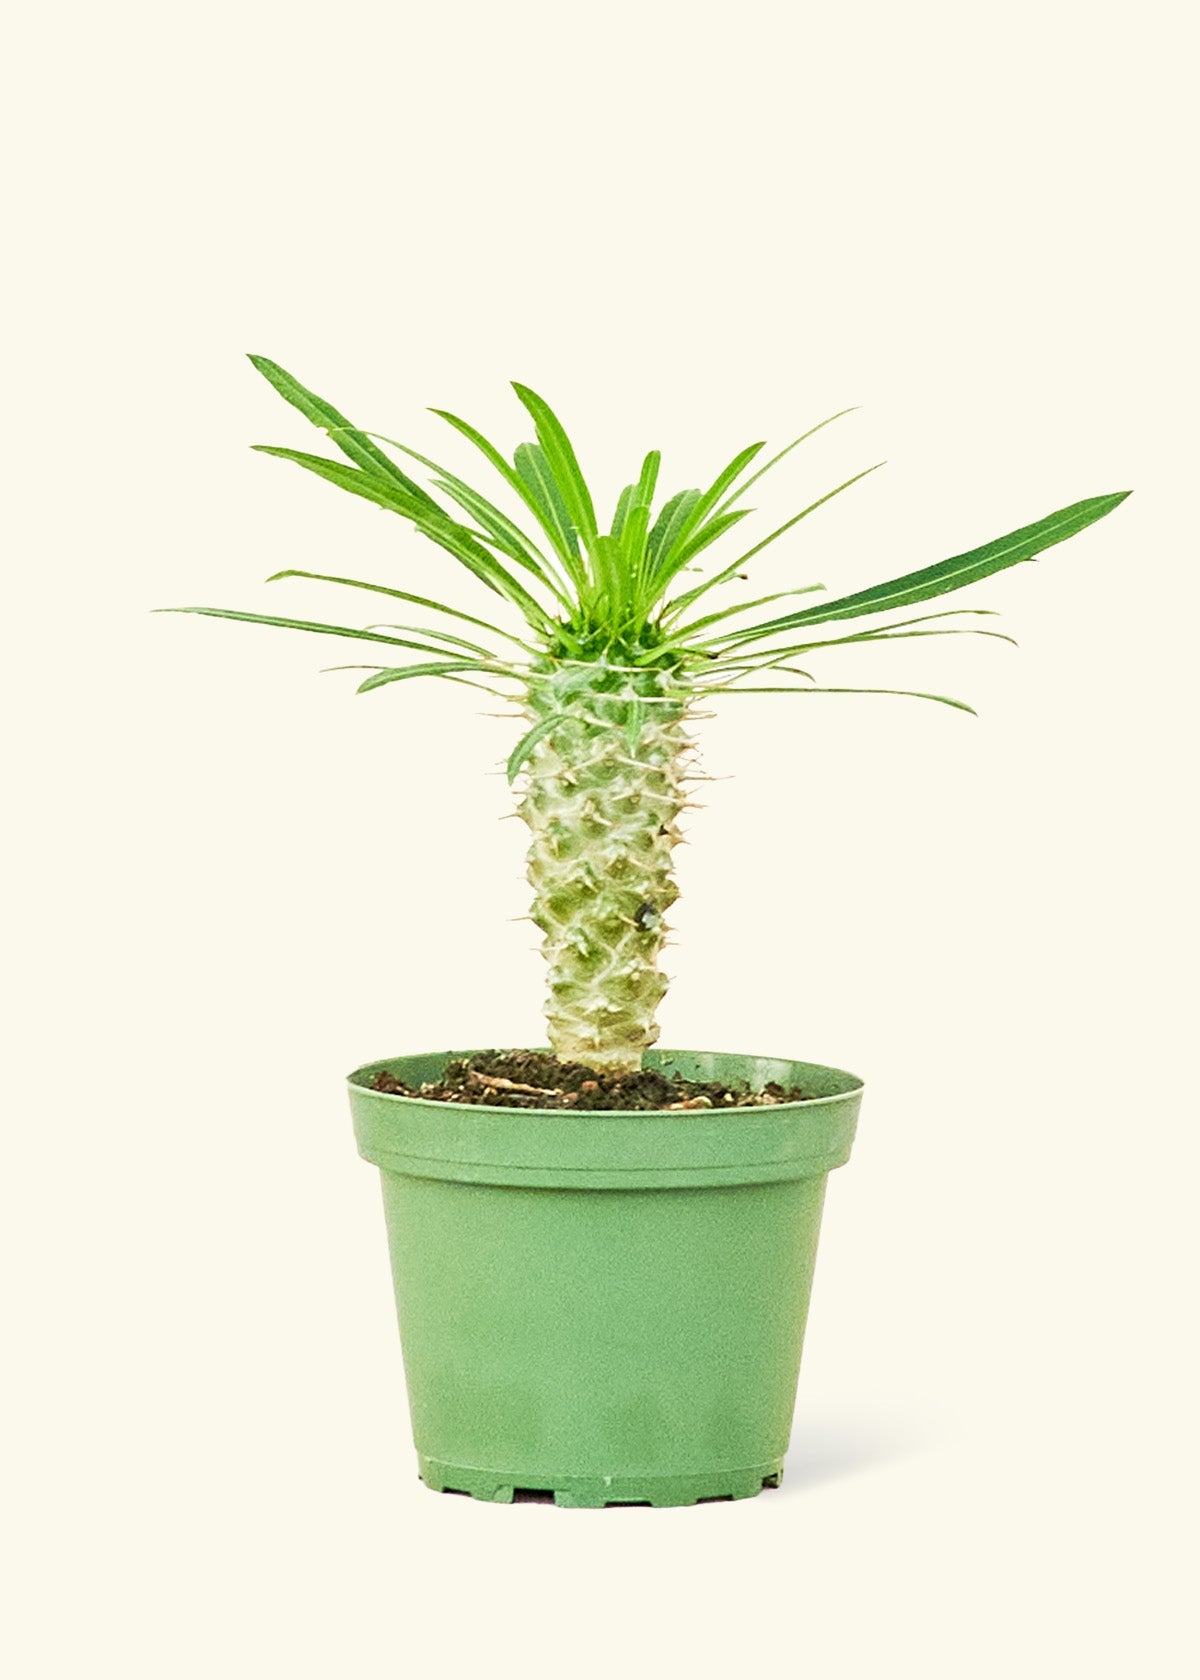 Small Madagascar Palm (Pachypodium lamerei) in a grow pot.